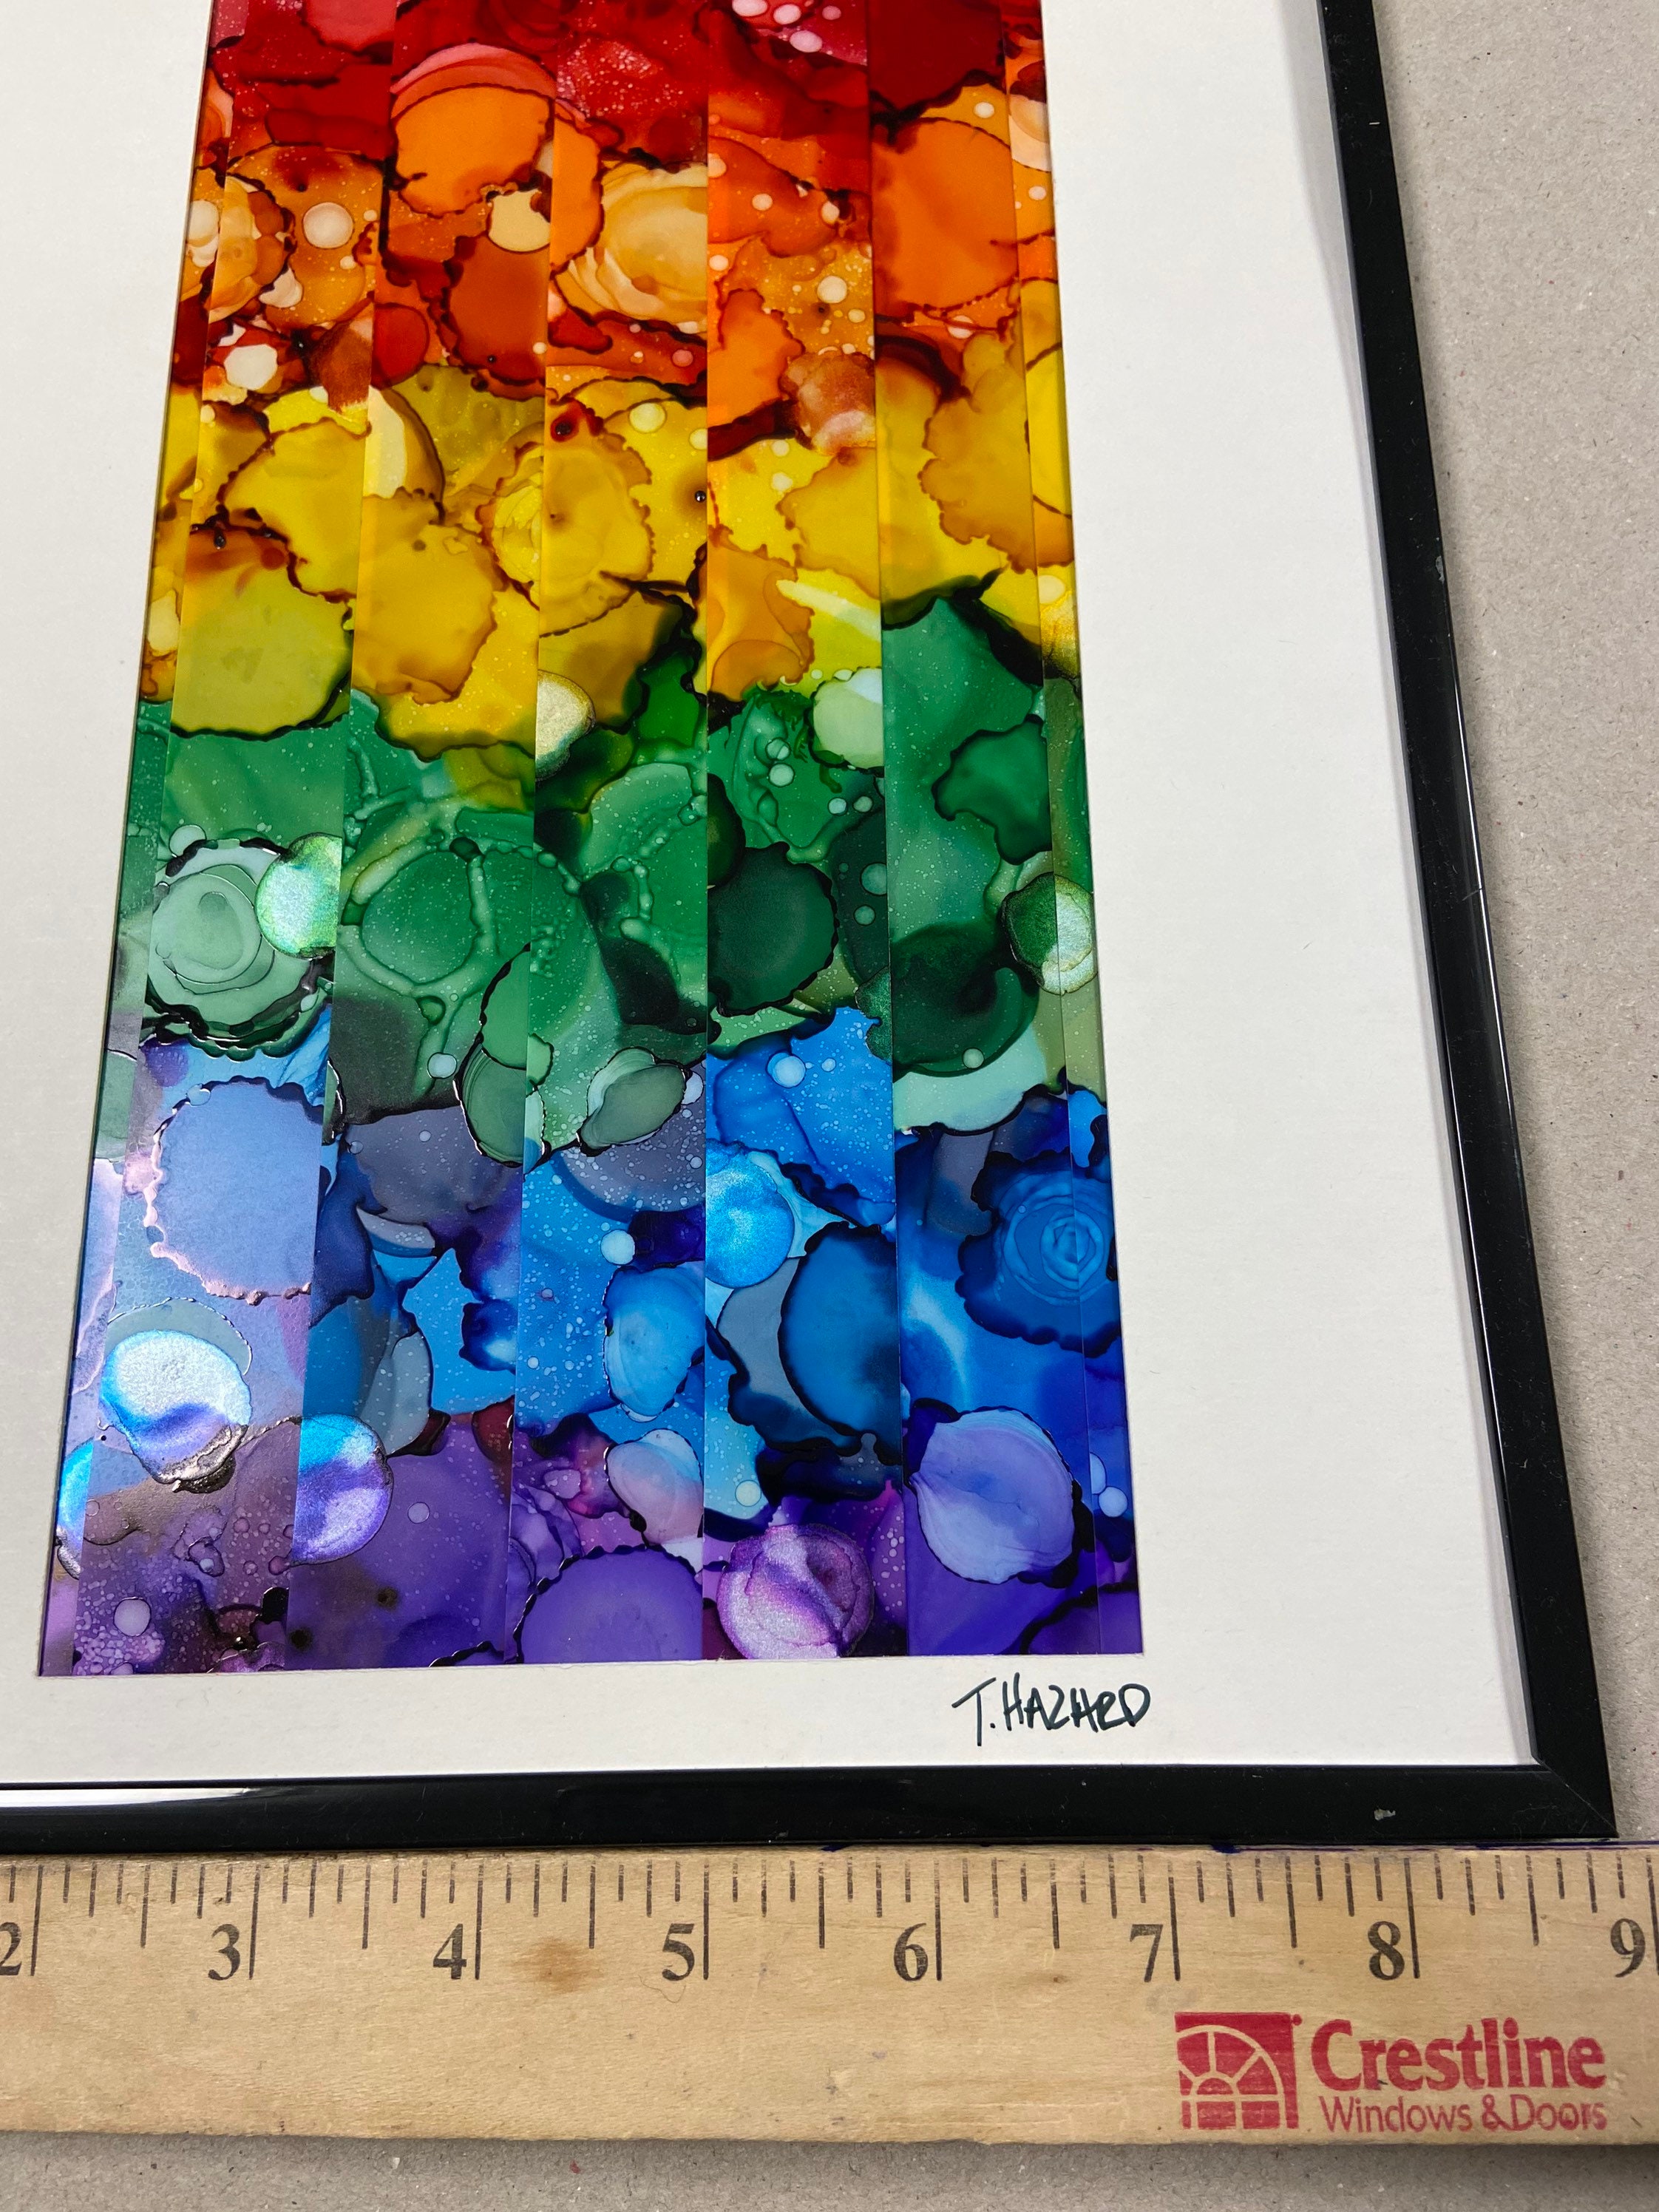 Alcohol Ink Strips Rainbow Color Framed Shelf Art On Yupo Paper